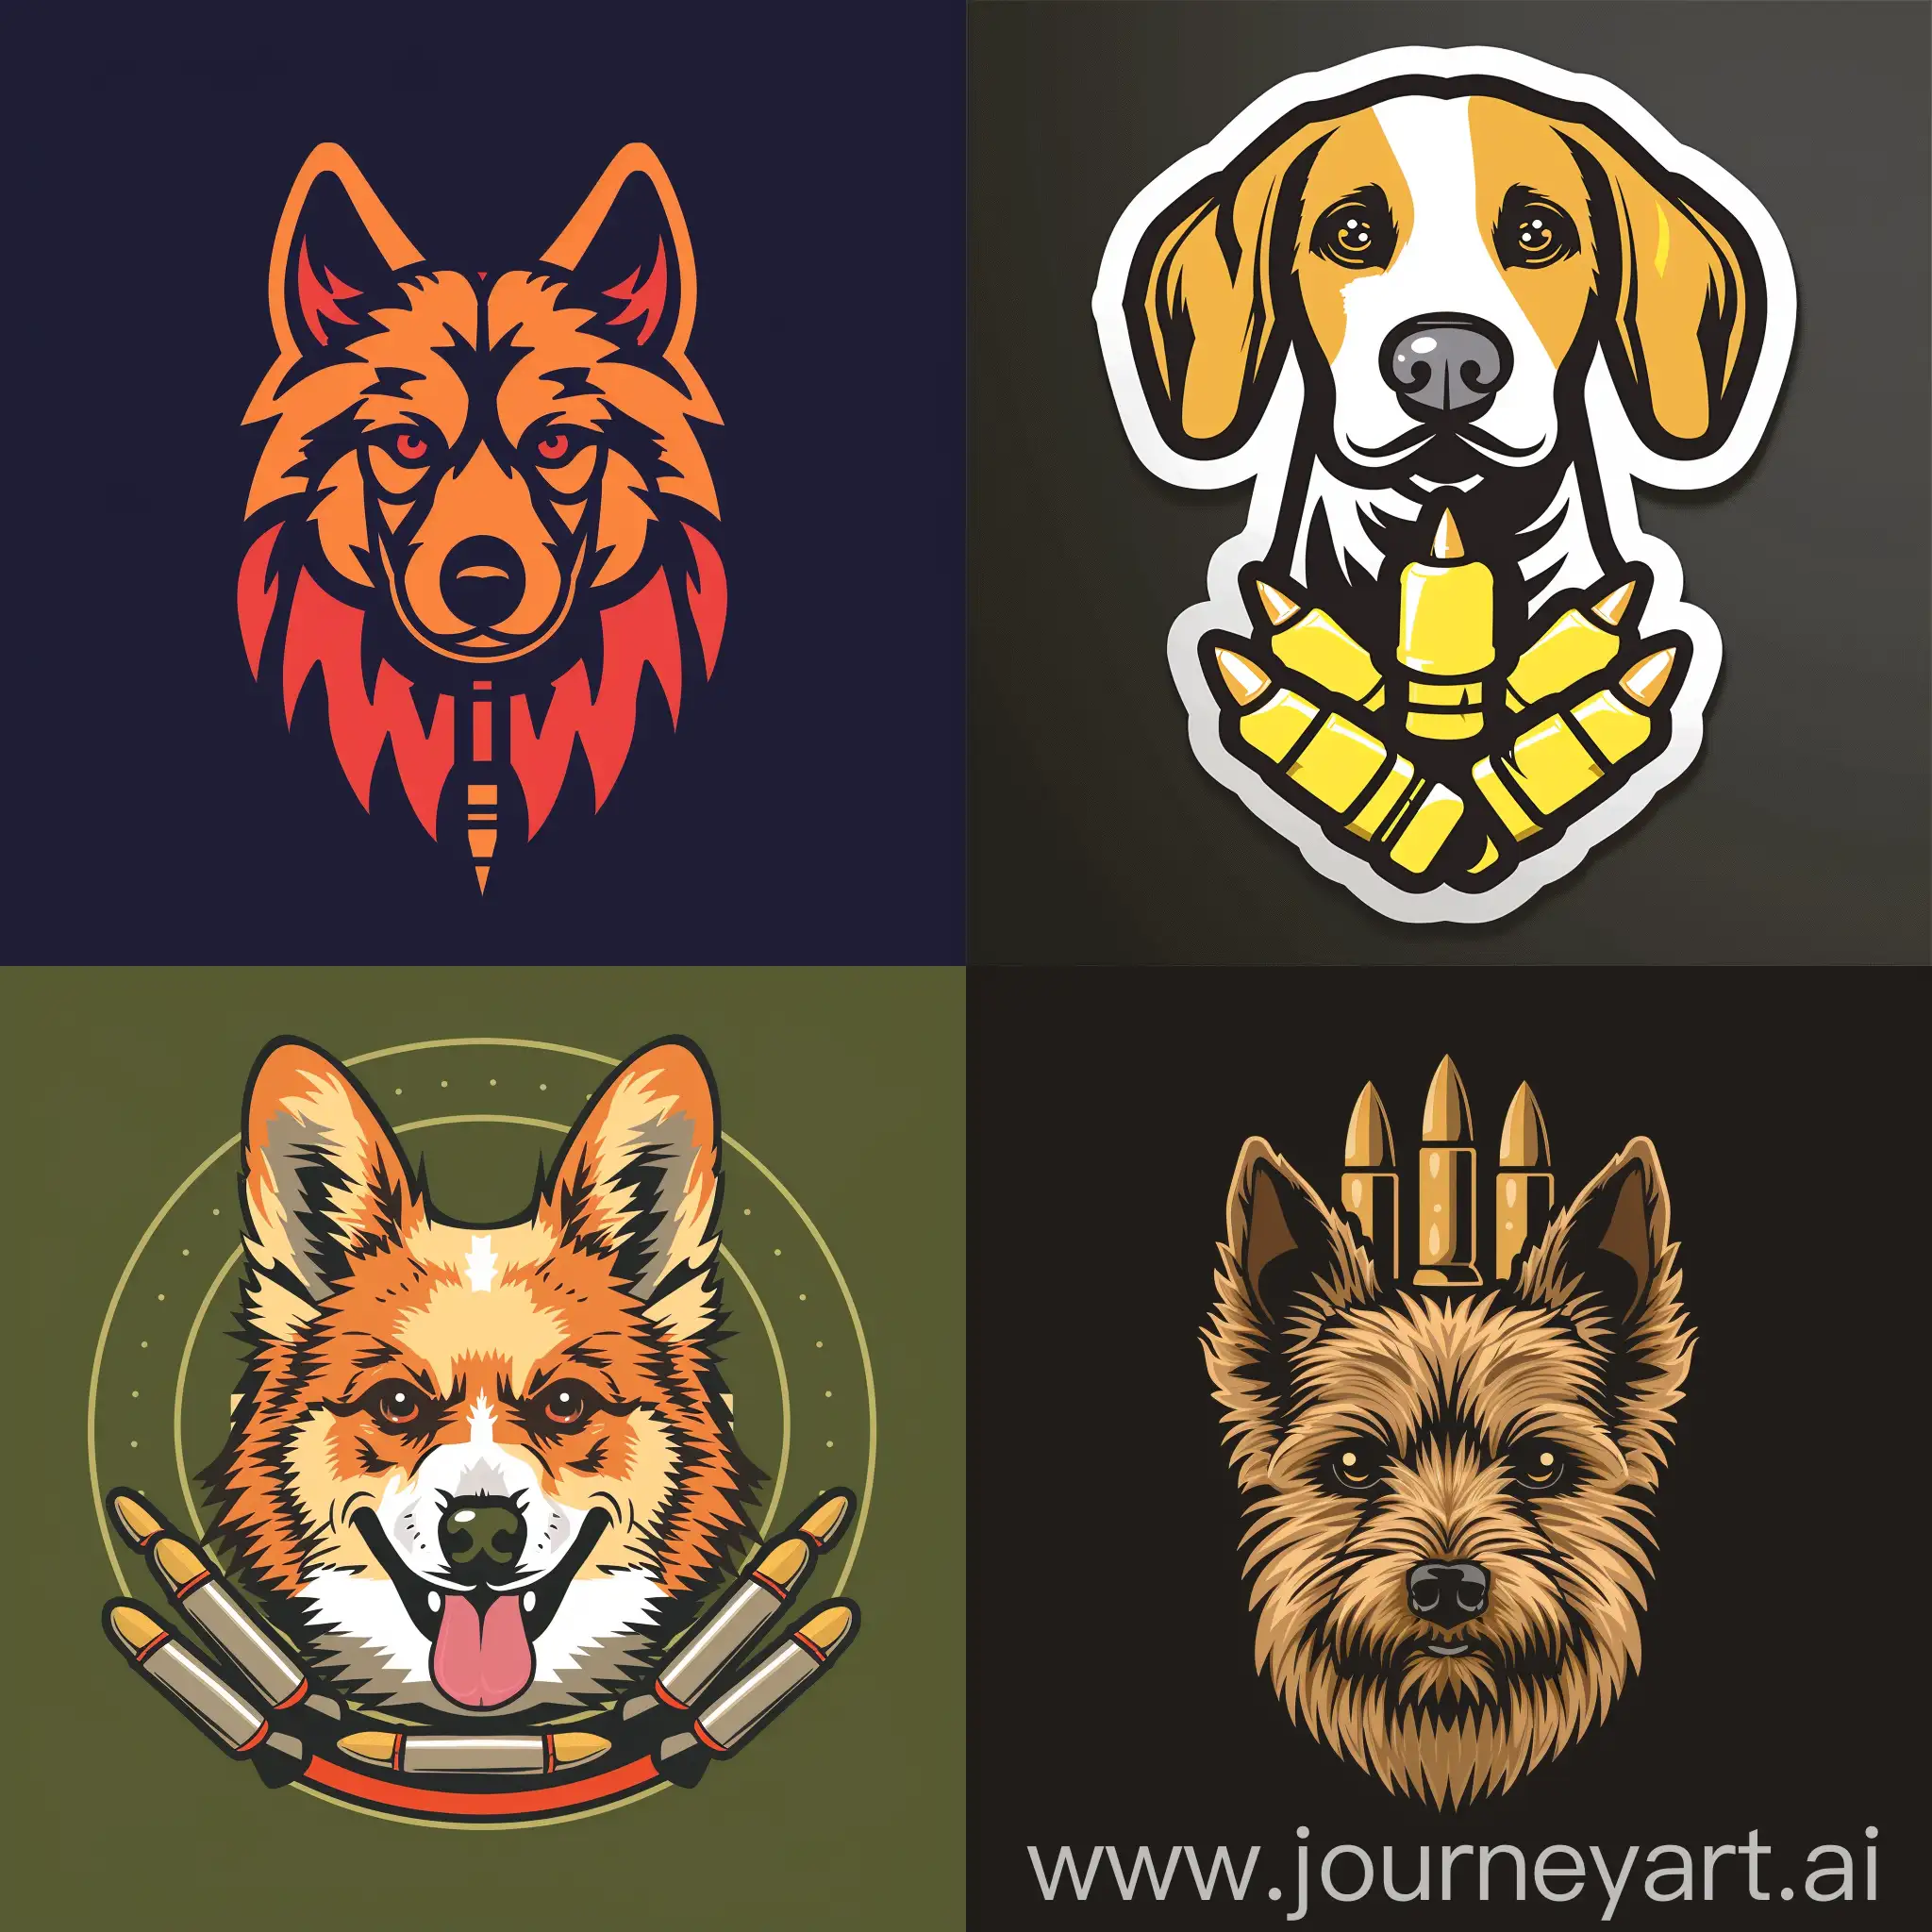 ammunition for dogs Logo for dog